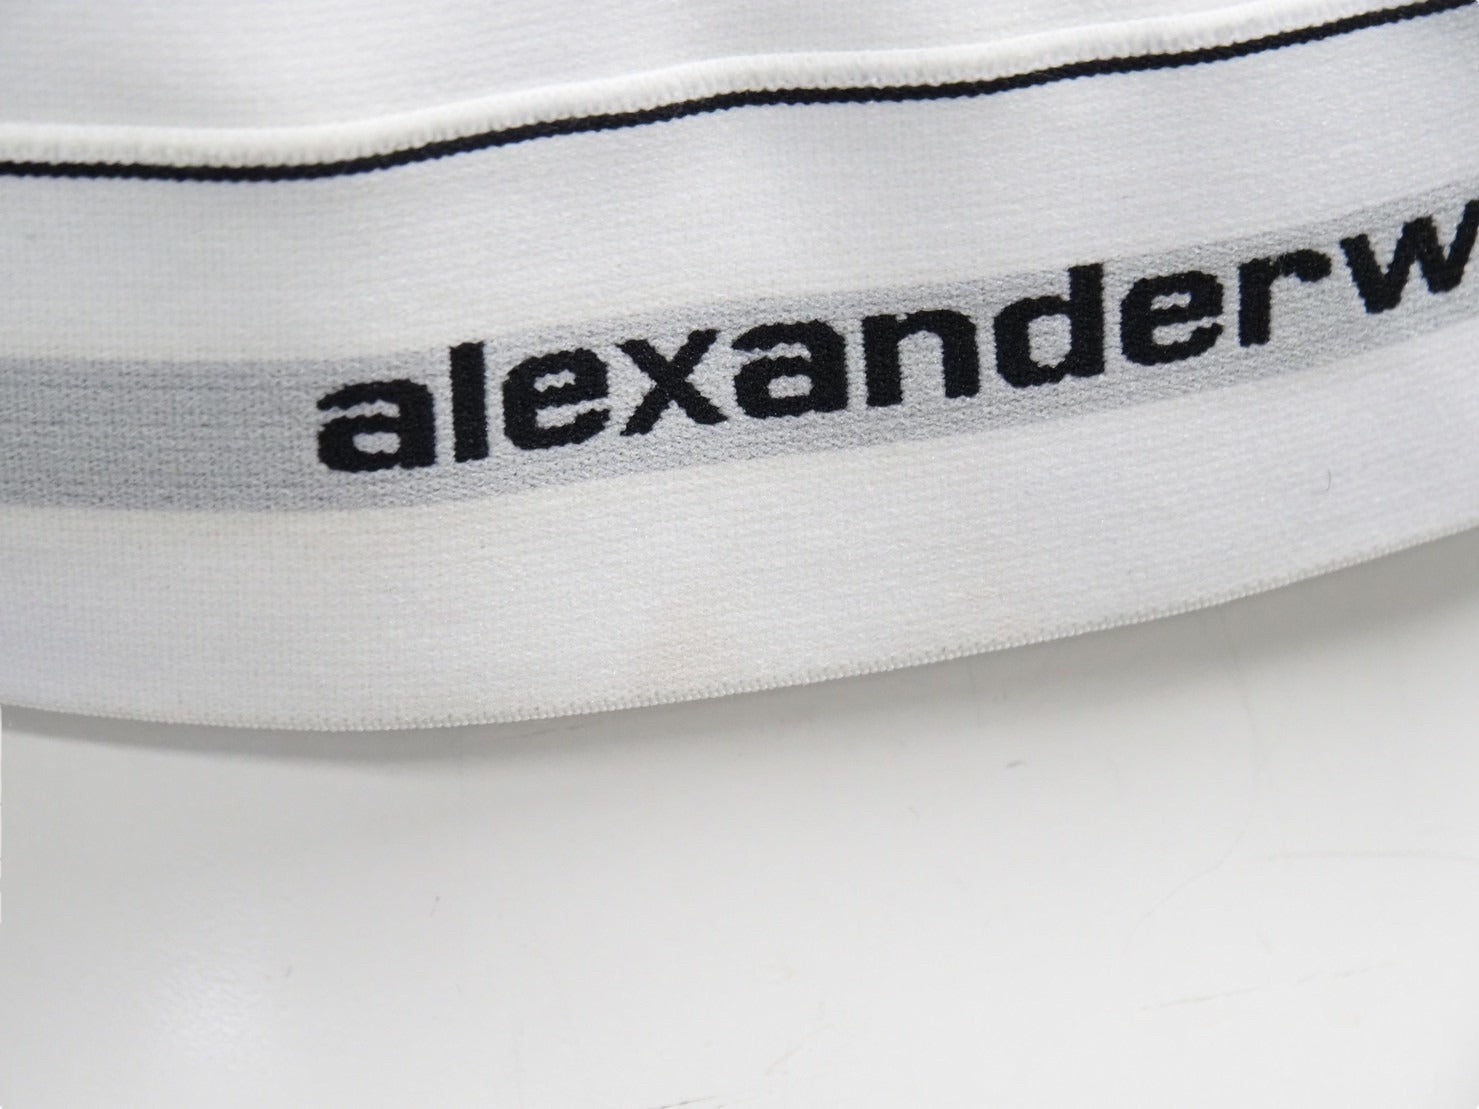 Alexander Wang アレキサンダーワン トップス ブラトップ ストレッチ